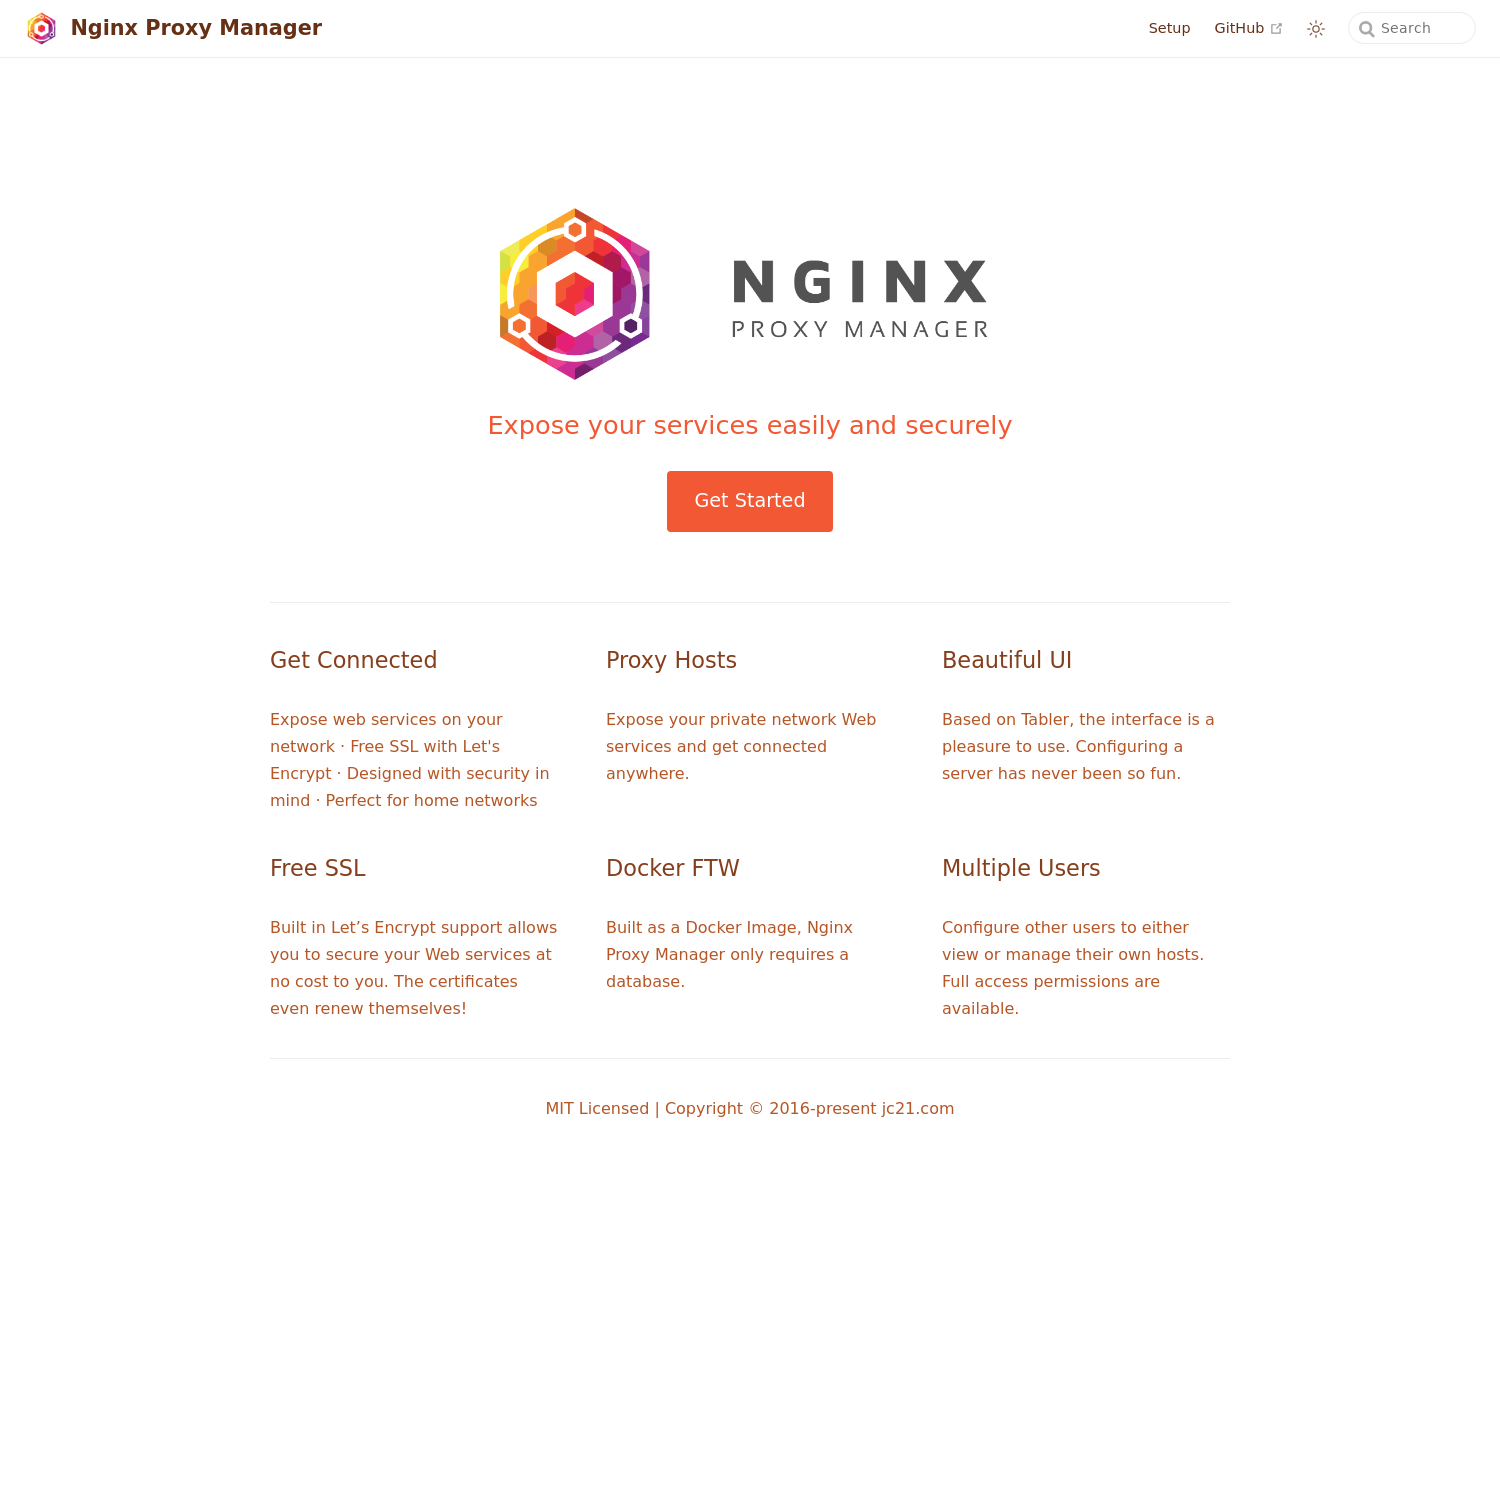 Nginx Proxy Manager
